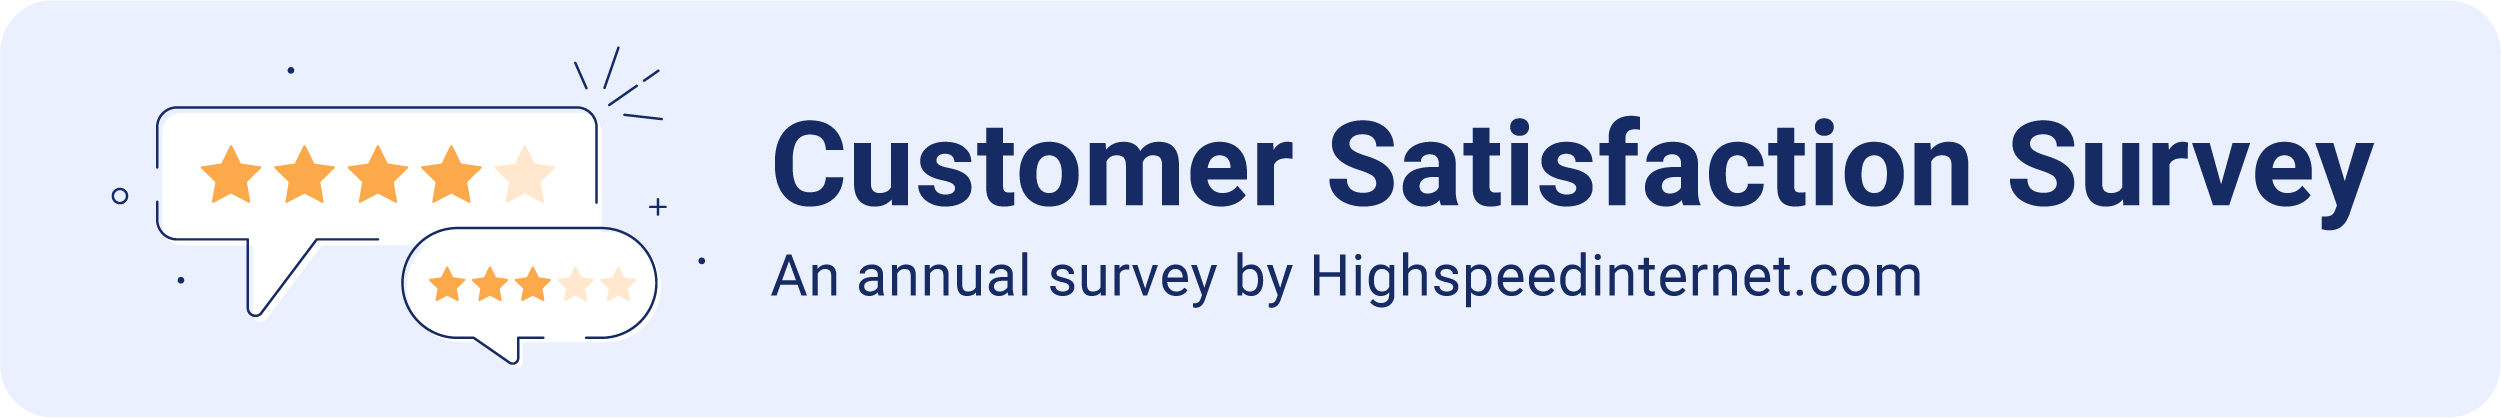 customer satisfaction survey badge graphic